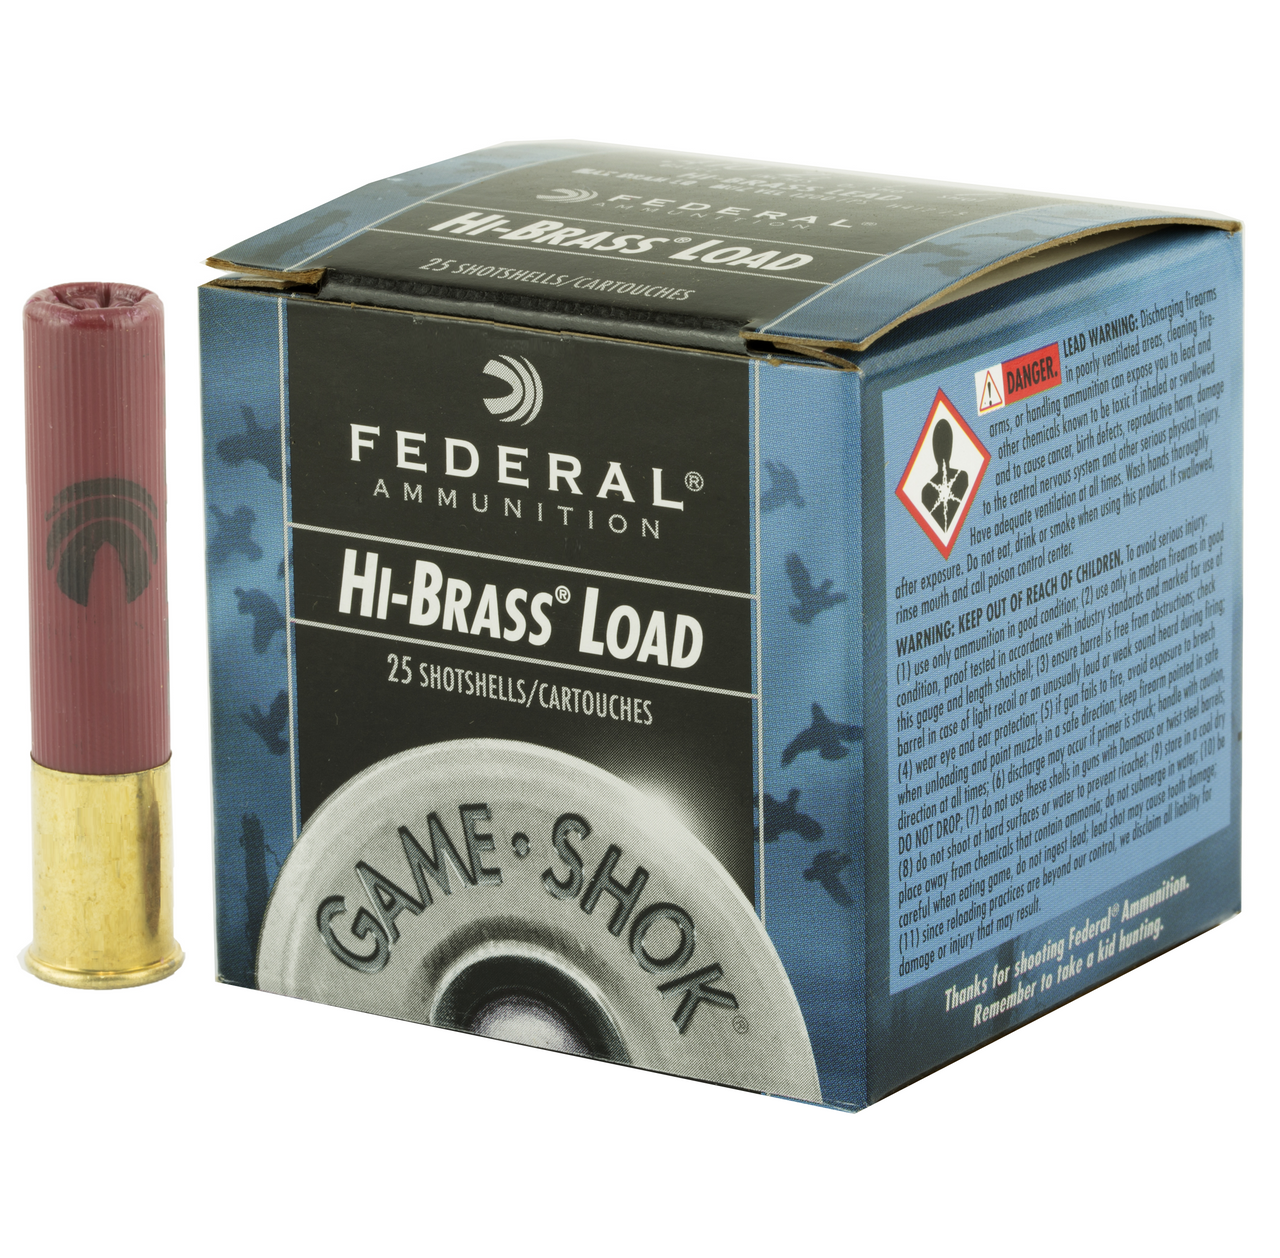 410 Shotgun Shells, Brass End View Stock Photo - Image of primers